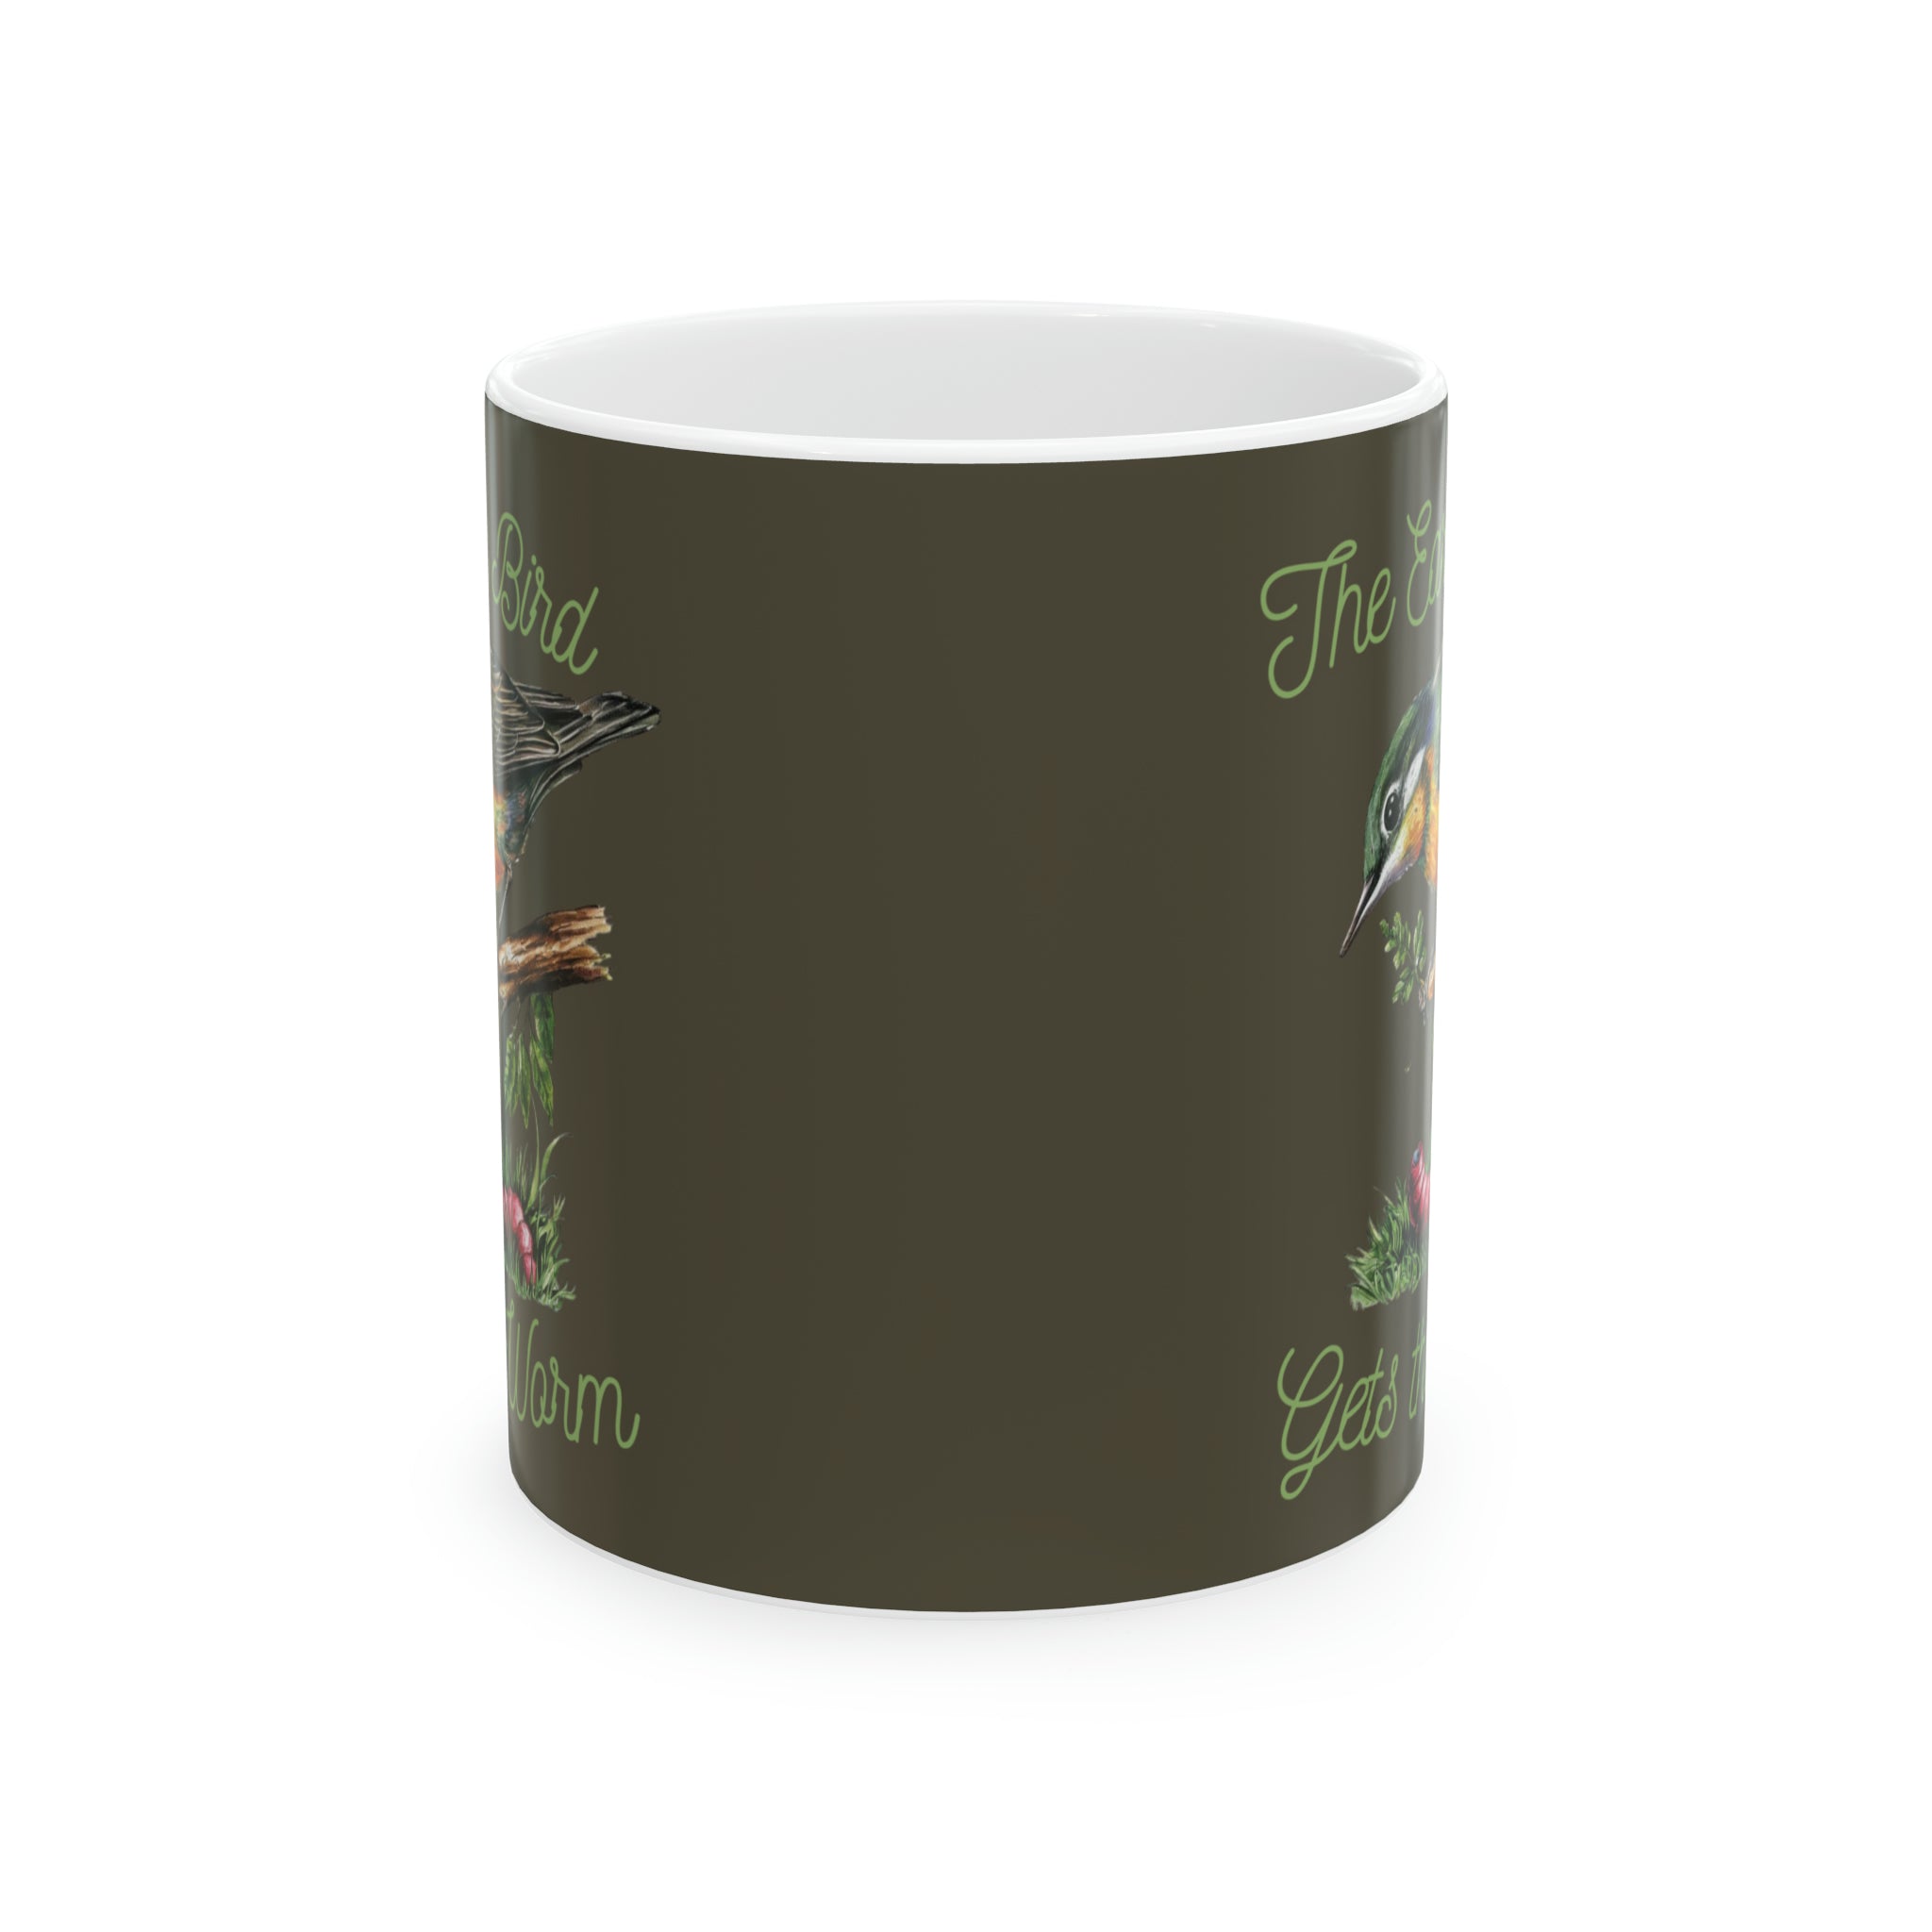 Early bird gets the worm - Ceramic Mug, 11oz